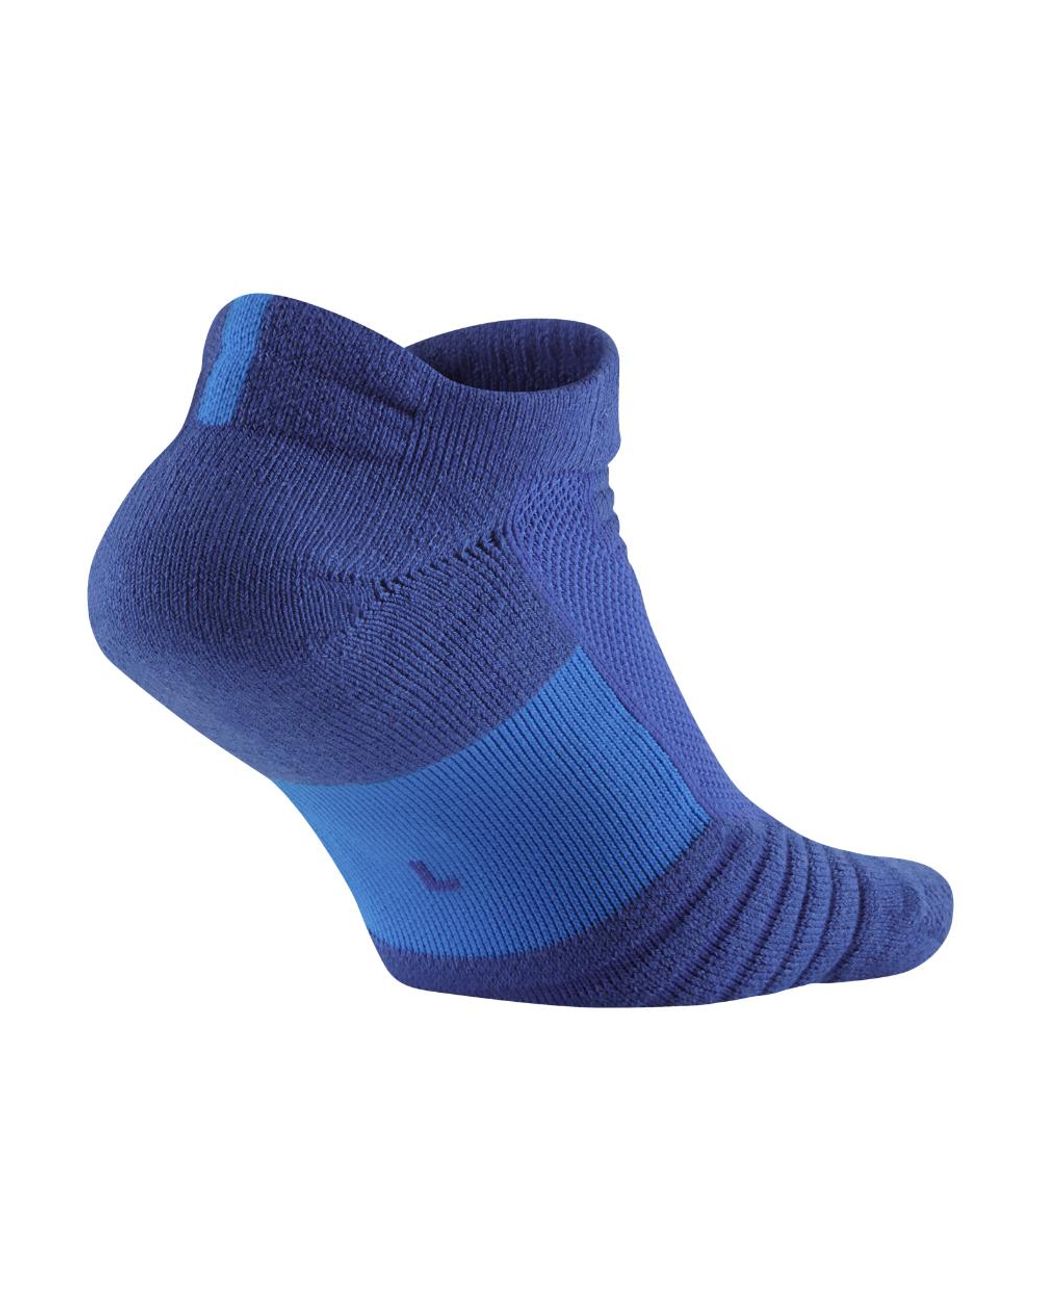 Nike Elite Versatility Low Basketball Socks in Blue | Lyst